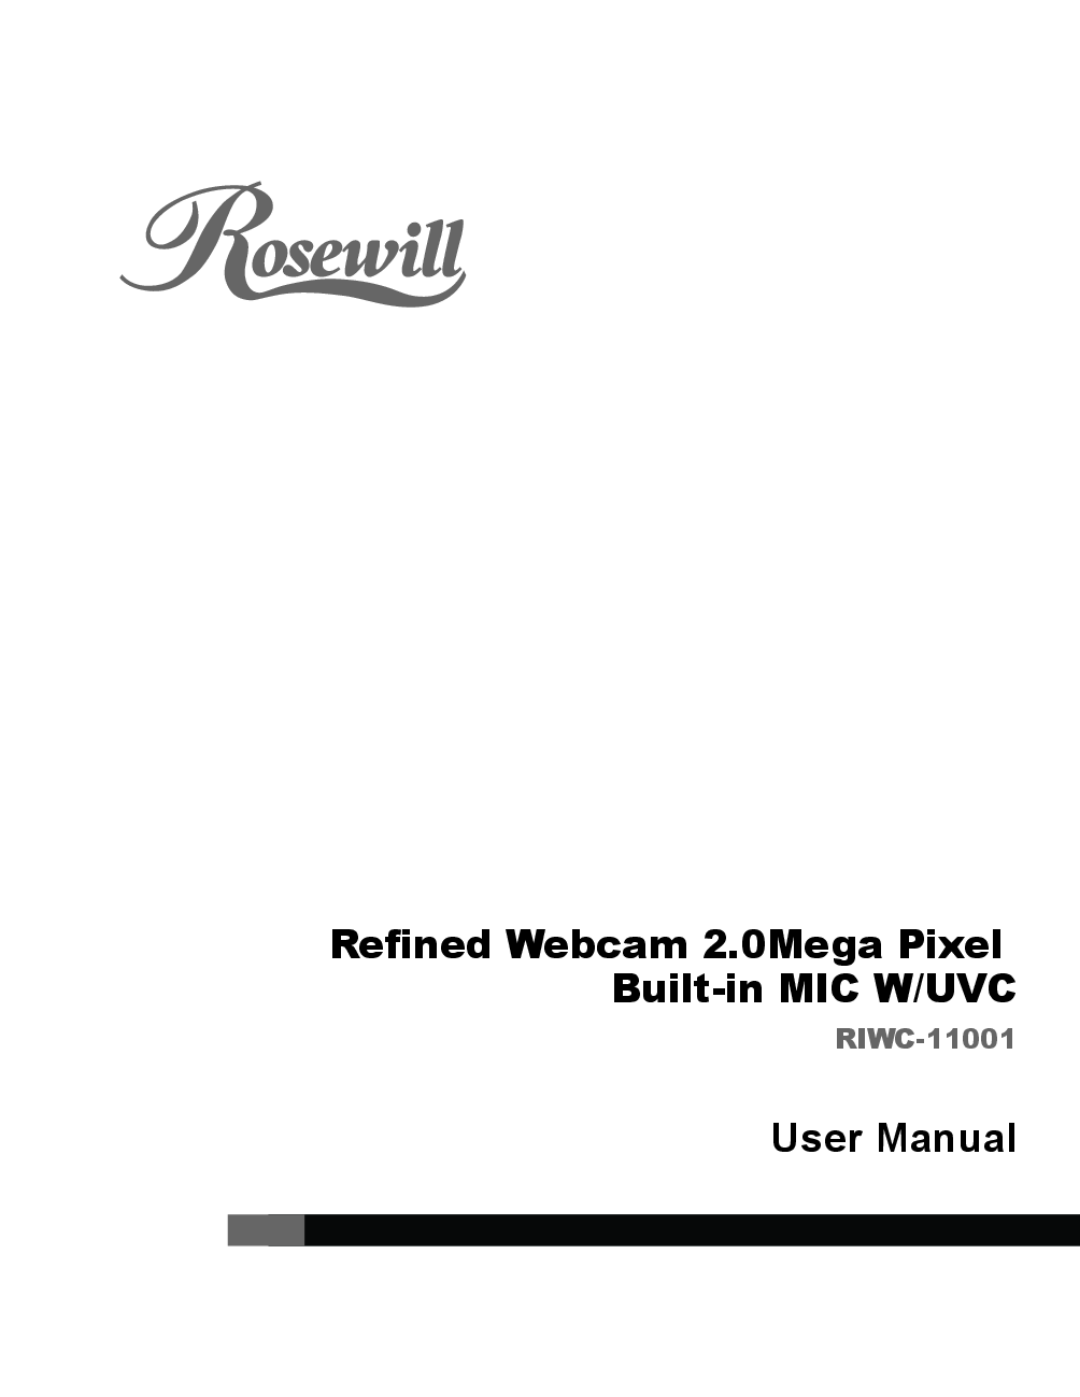 Rosewill RIWC-11001 user manual Refined Webcam 2.0Mega Pixel Built-in MIC W/UVC 